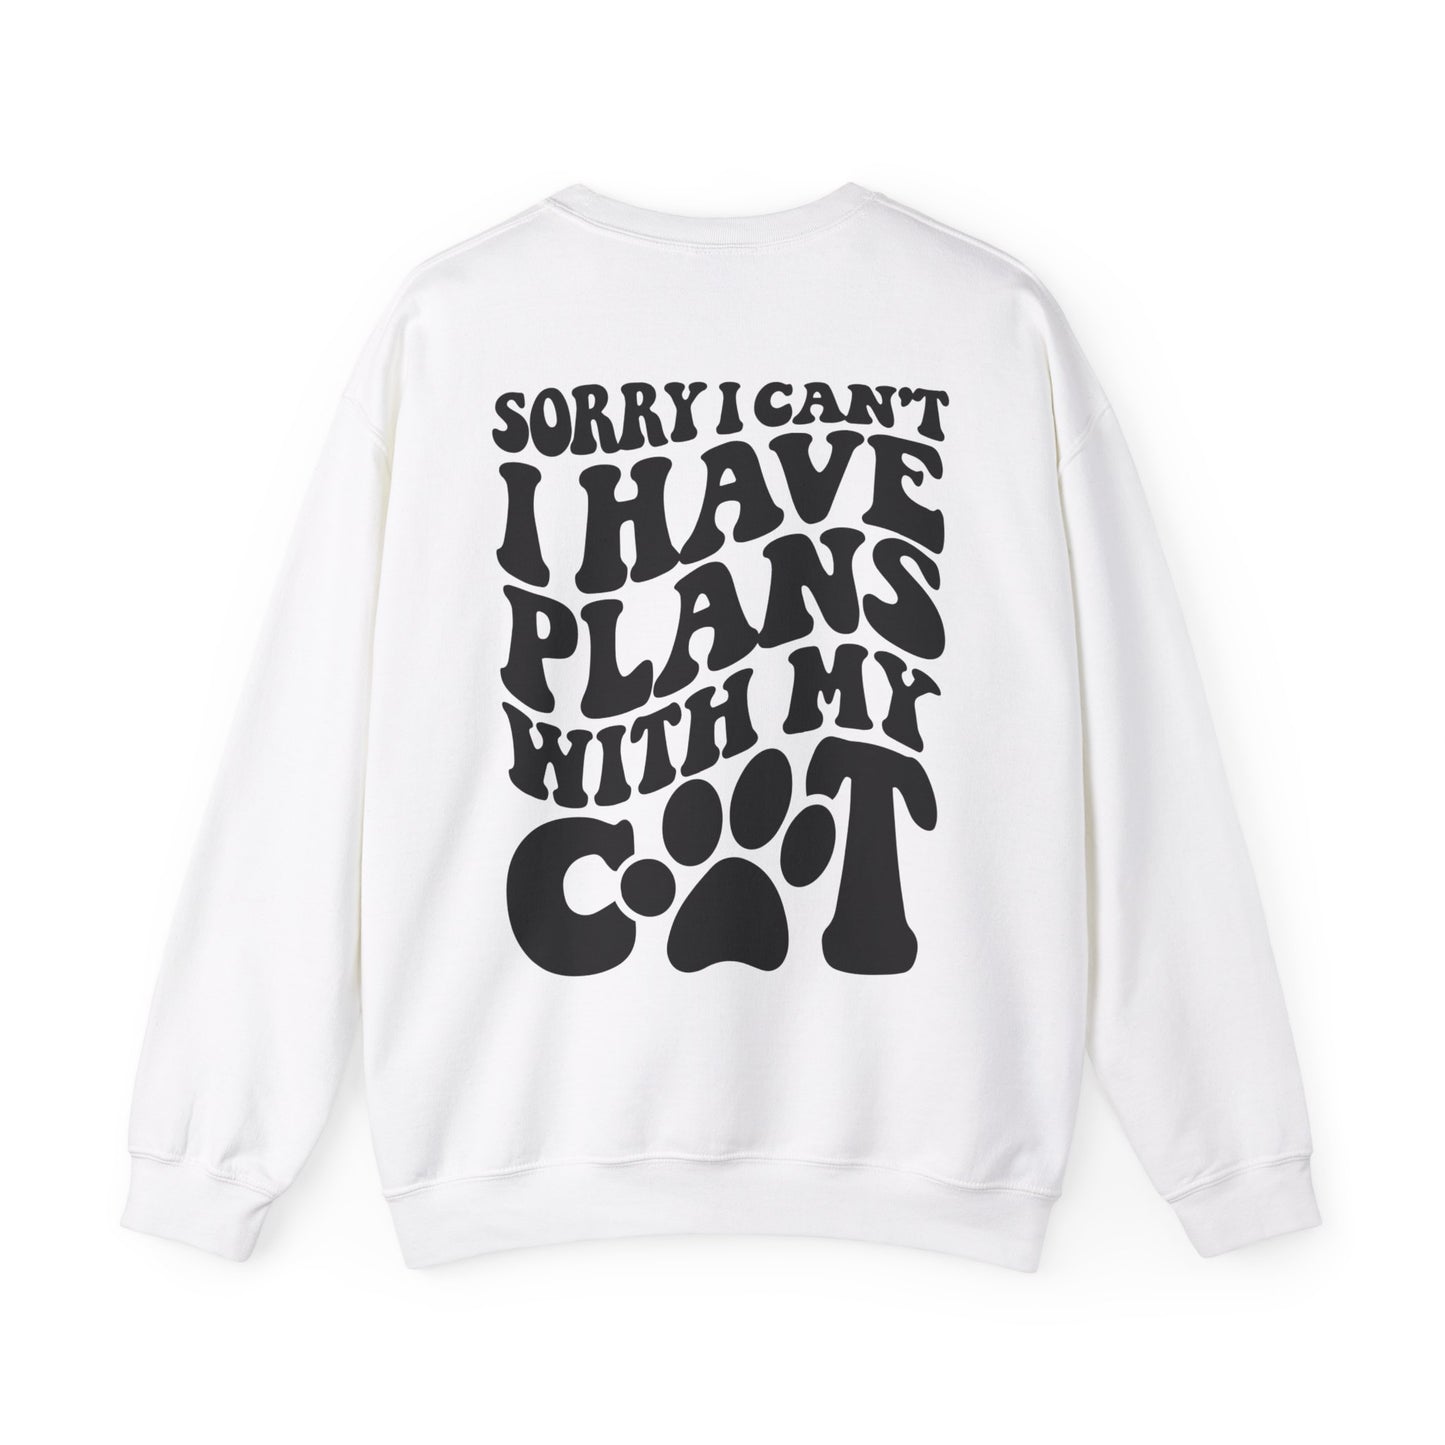 I have plans with my Cat - Crewneck Sweatshirt